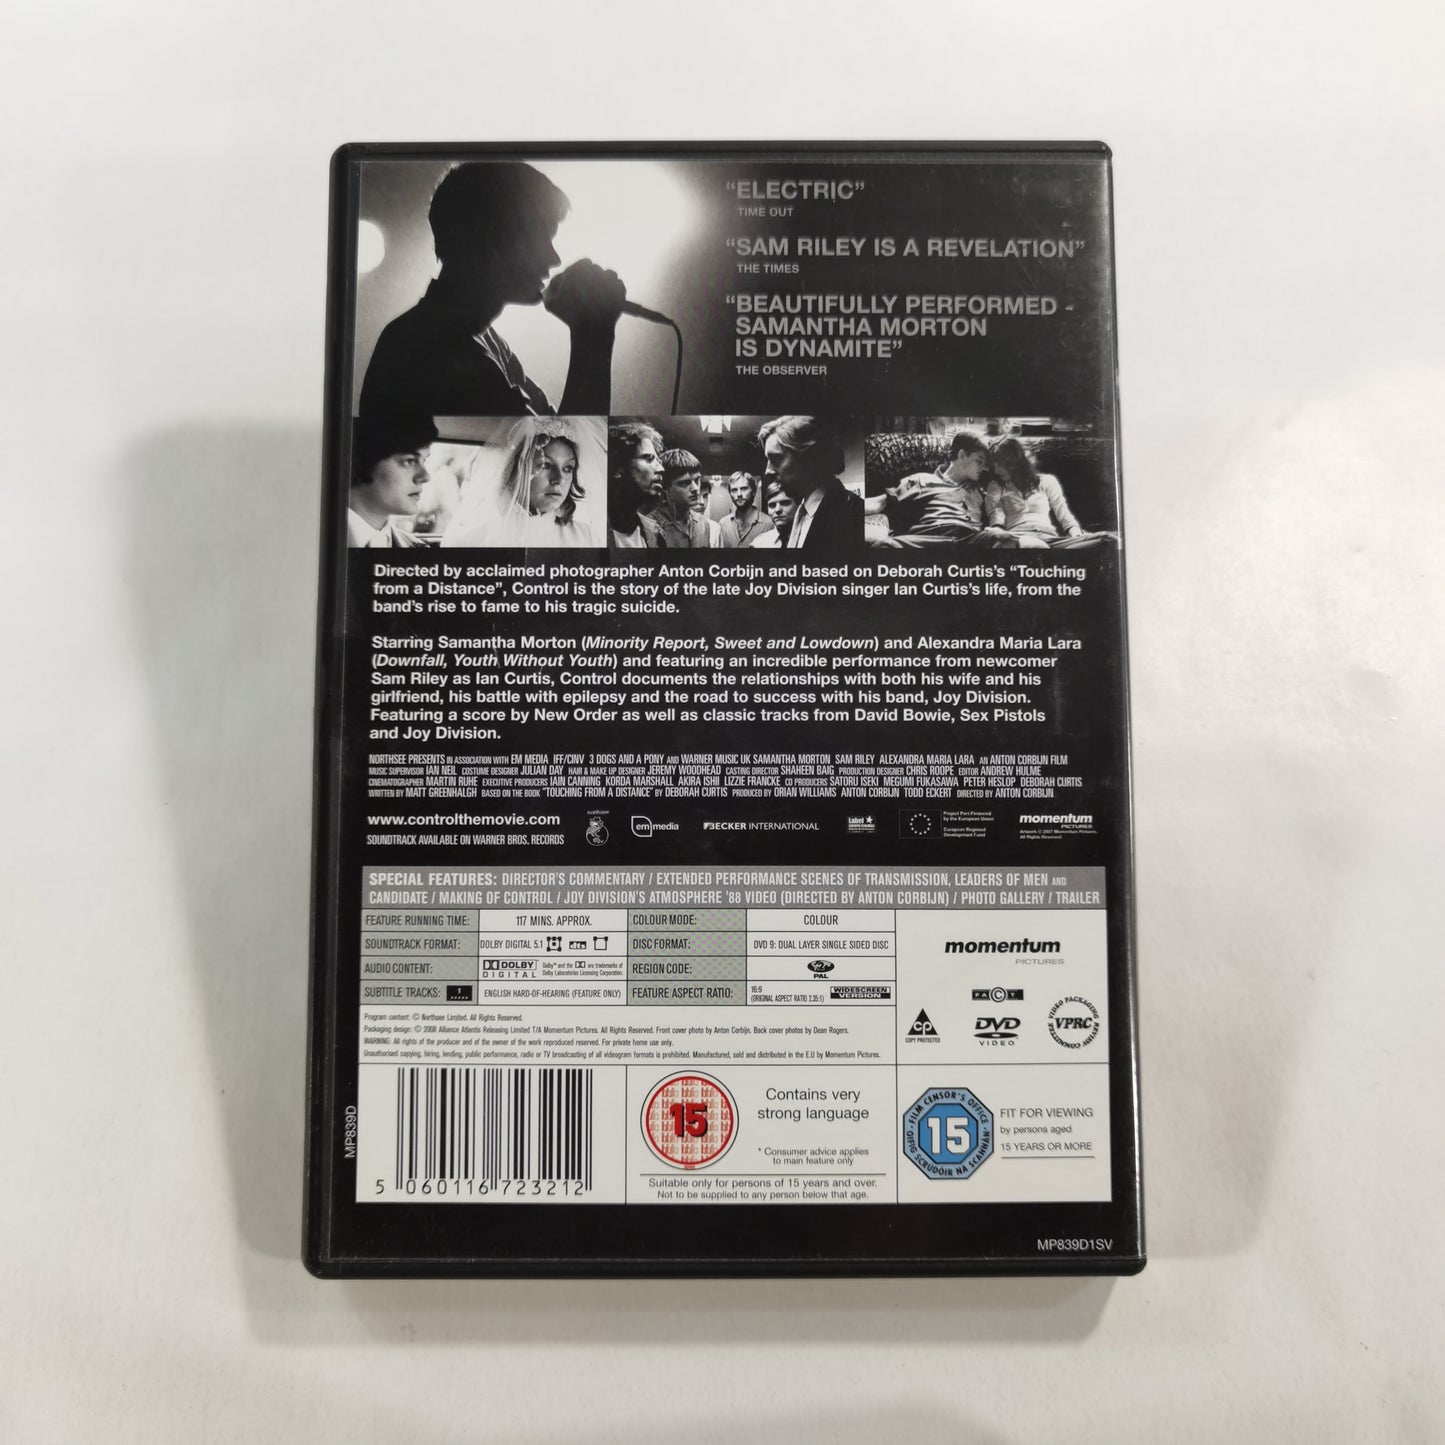 Control (2008) - DVD UK 2008